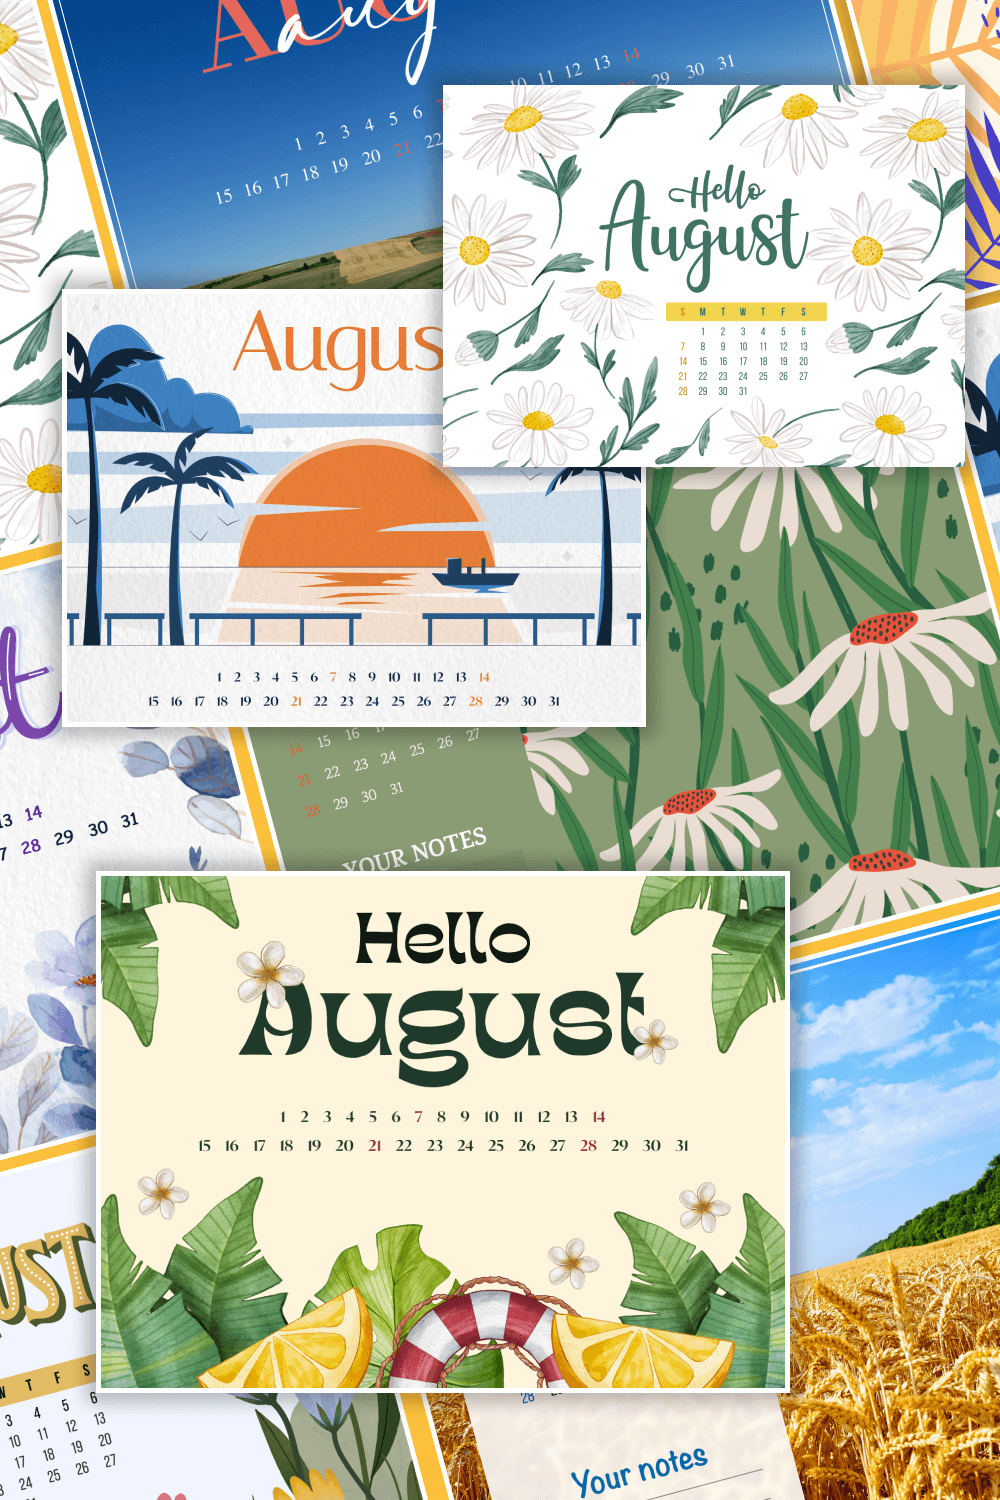 10 Free Editable August Calendars Pinterest Image.